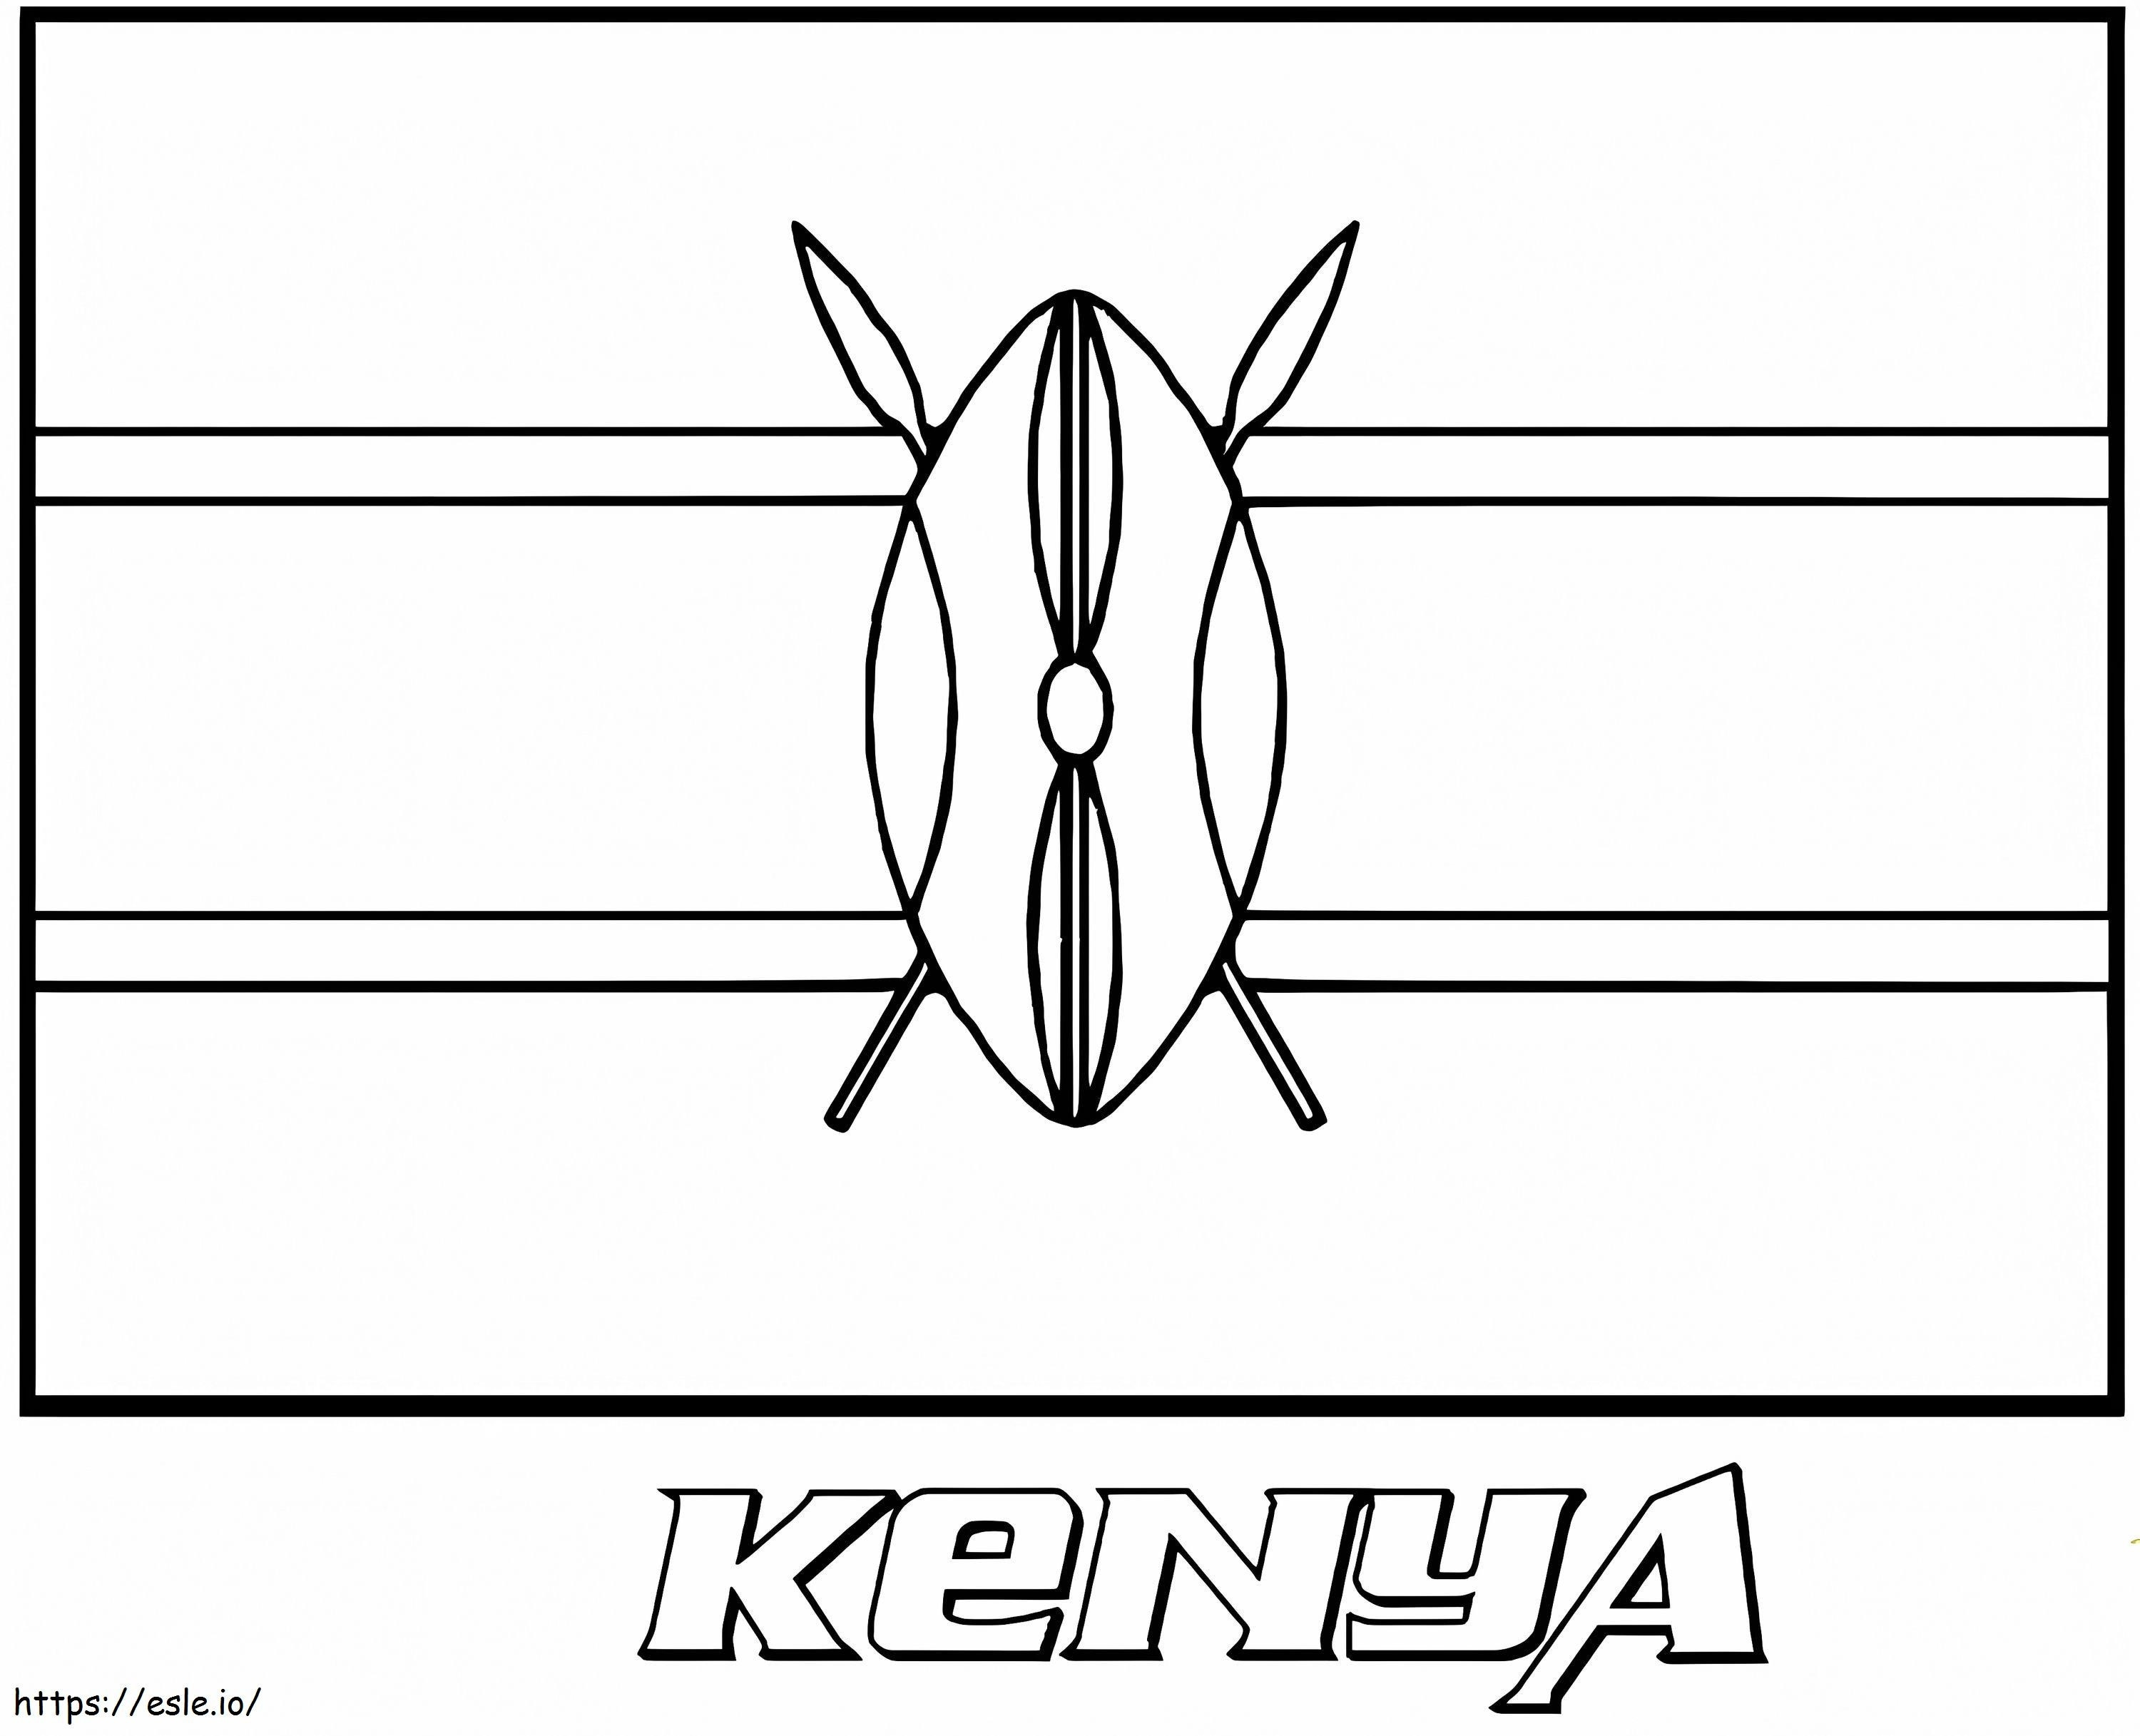 Flagge Kenias ausmalbilder